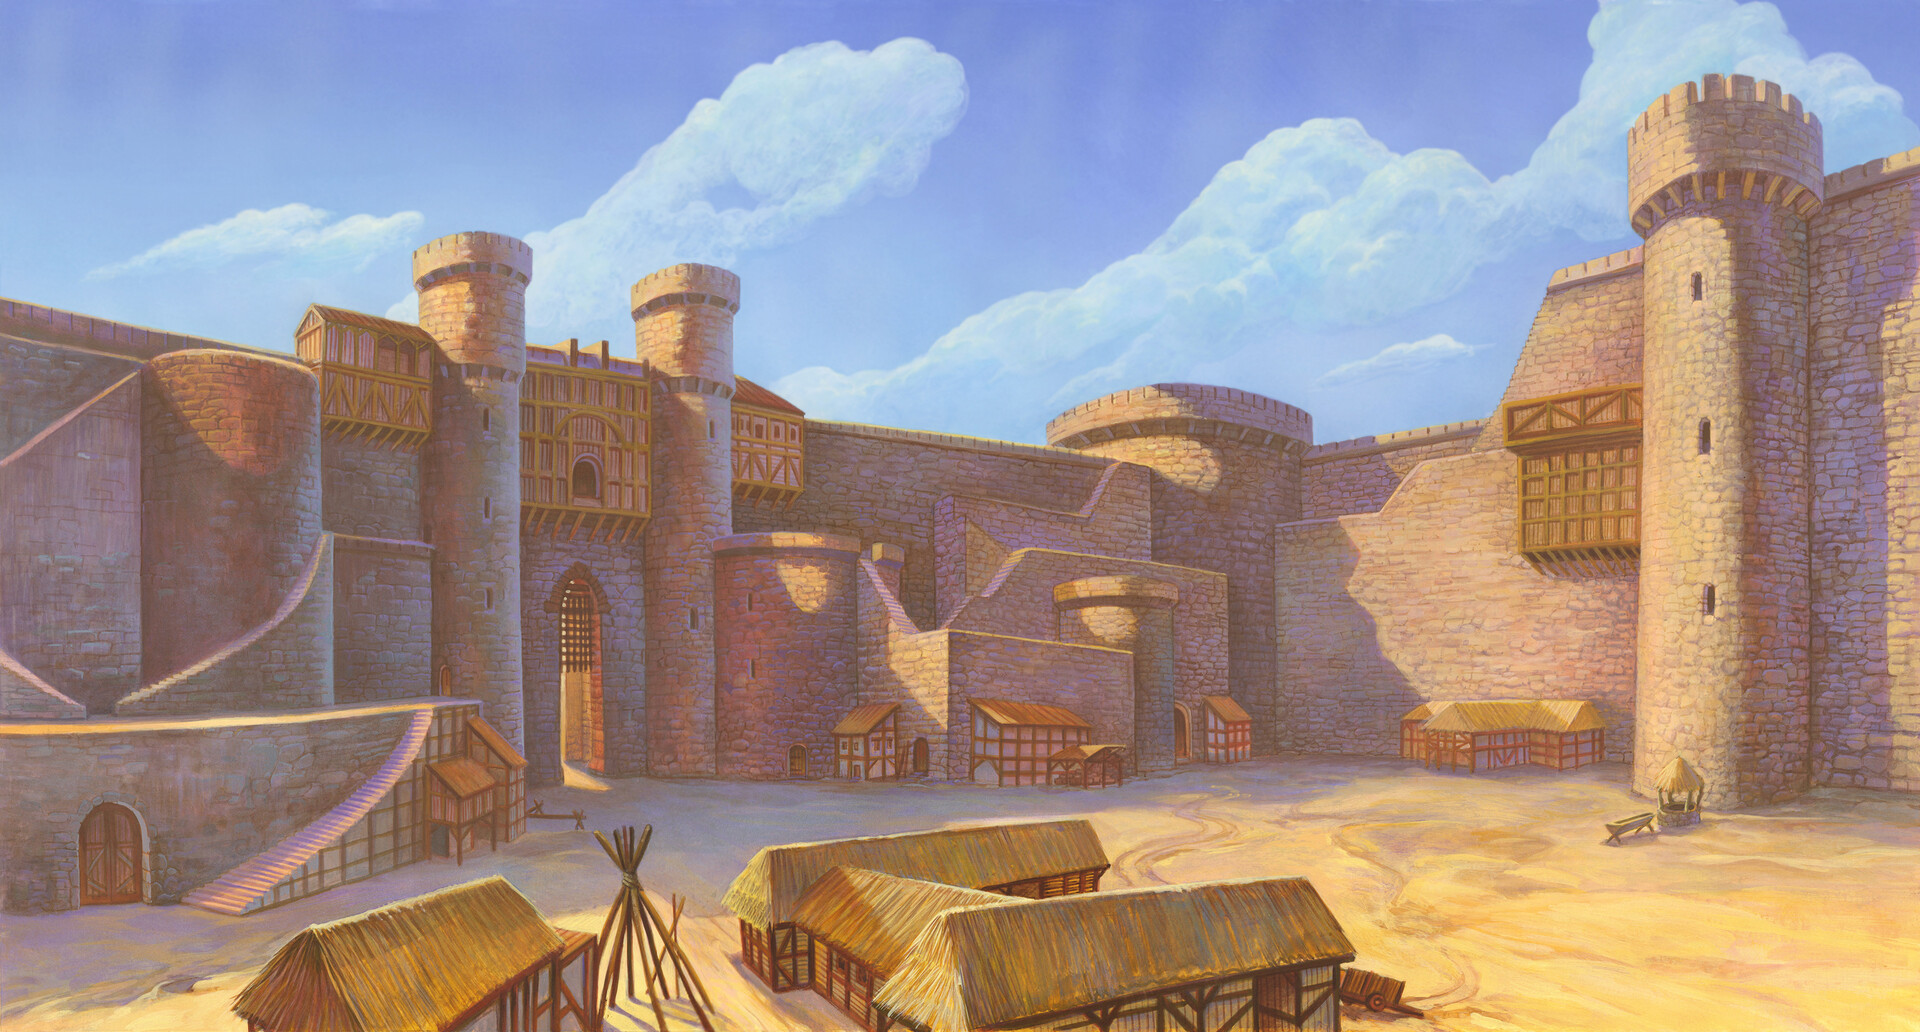 El Cid's fortress reveals medieval downsizing